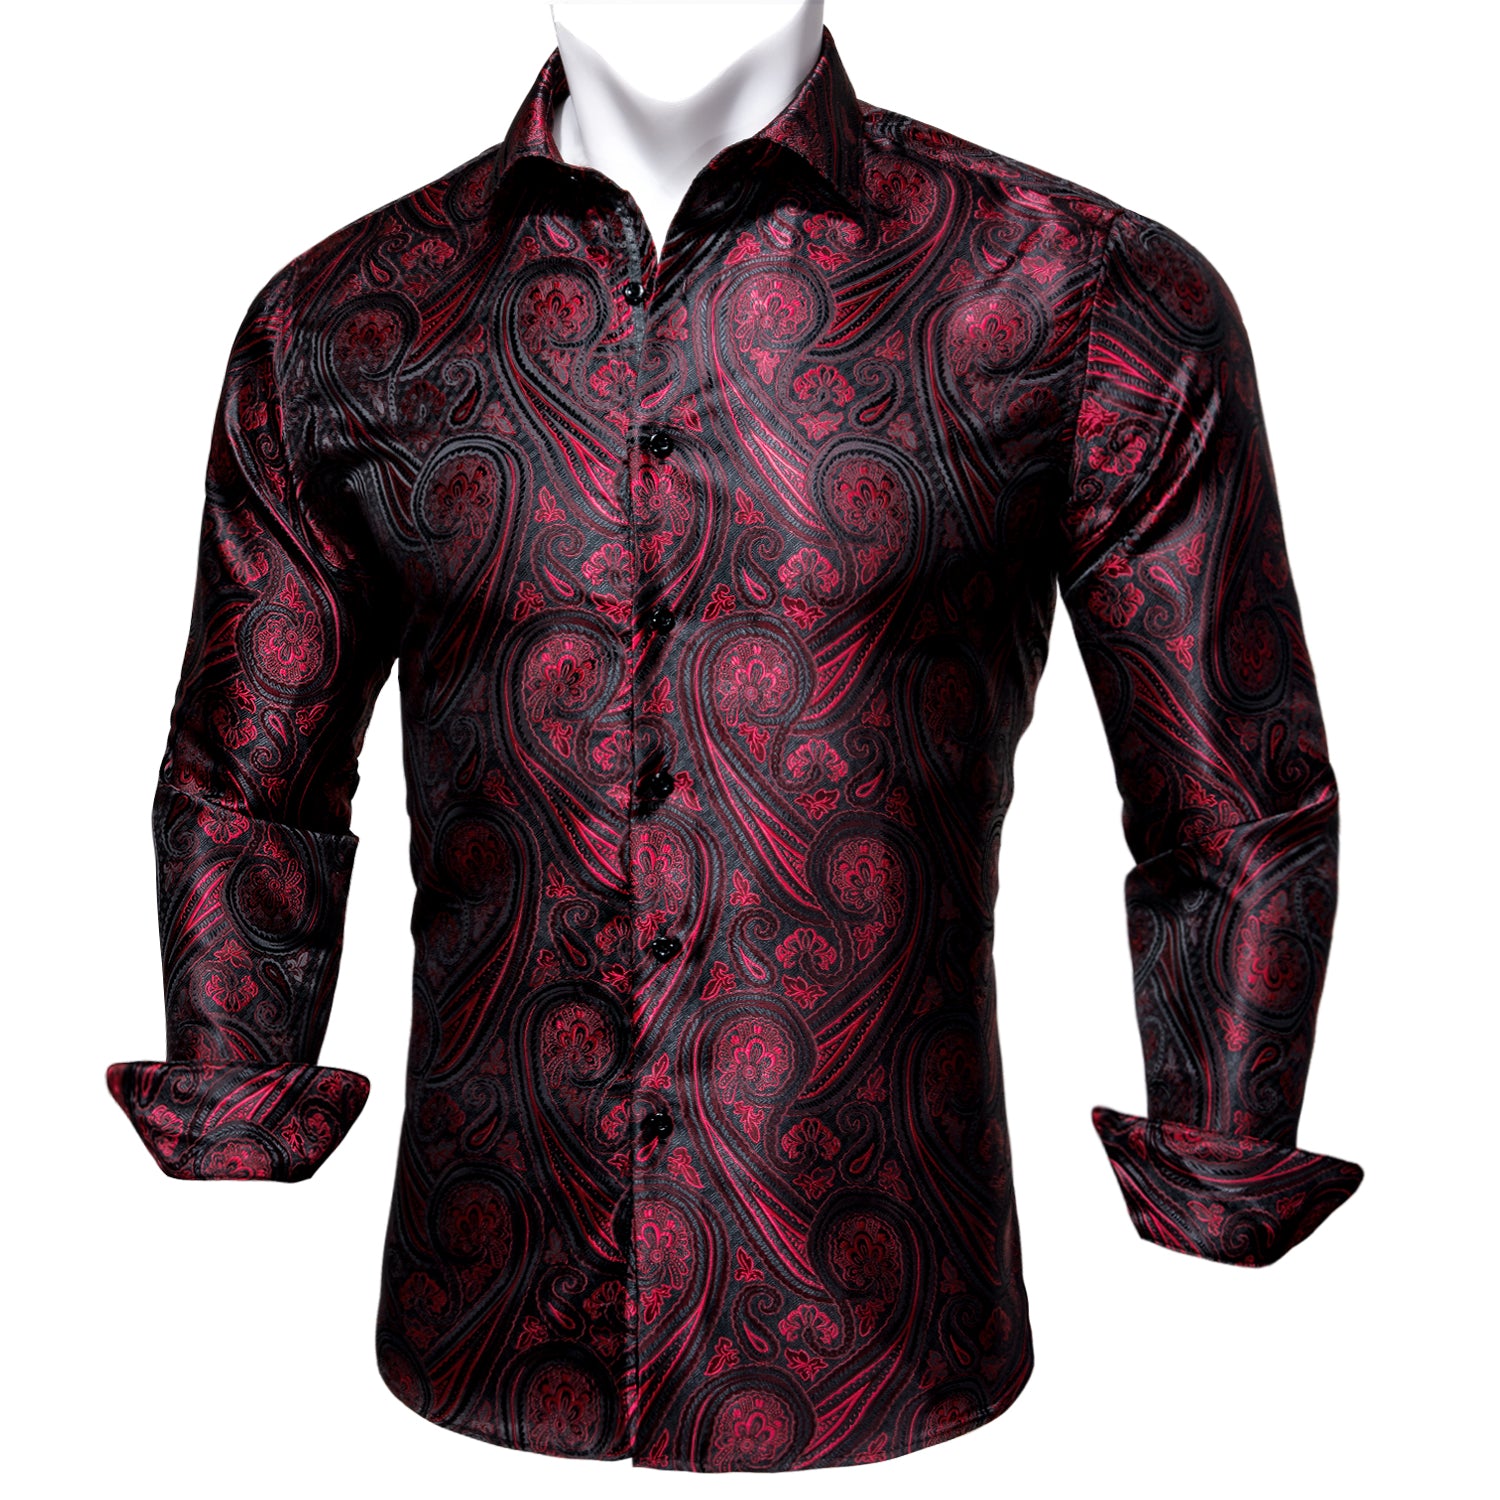 Barry.wang Button Down Shirt Red Black Jacquard Paisley Men's Shirt